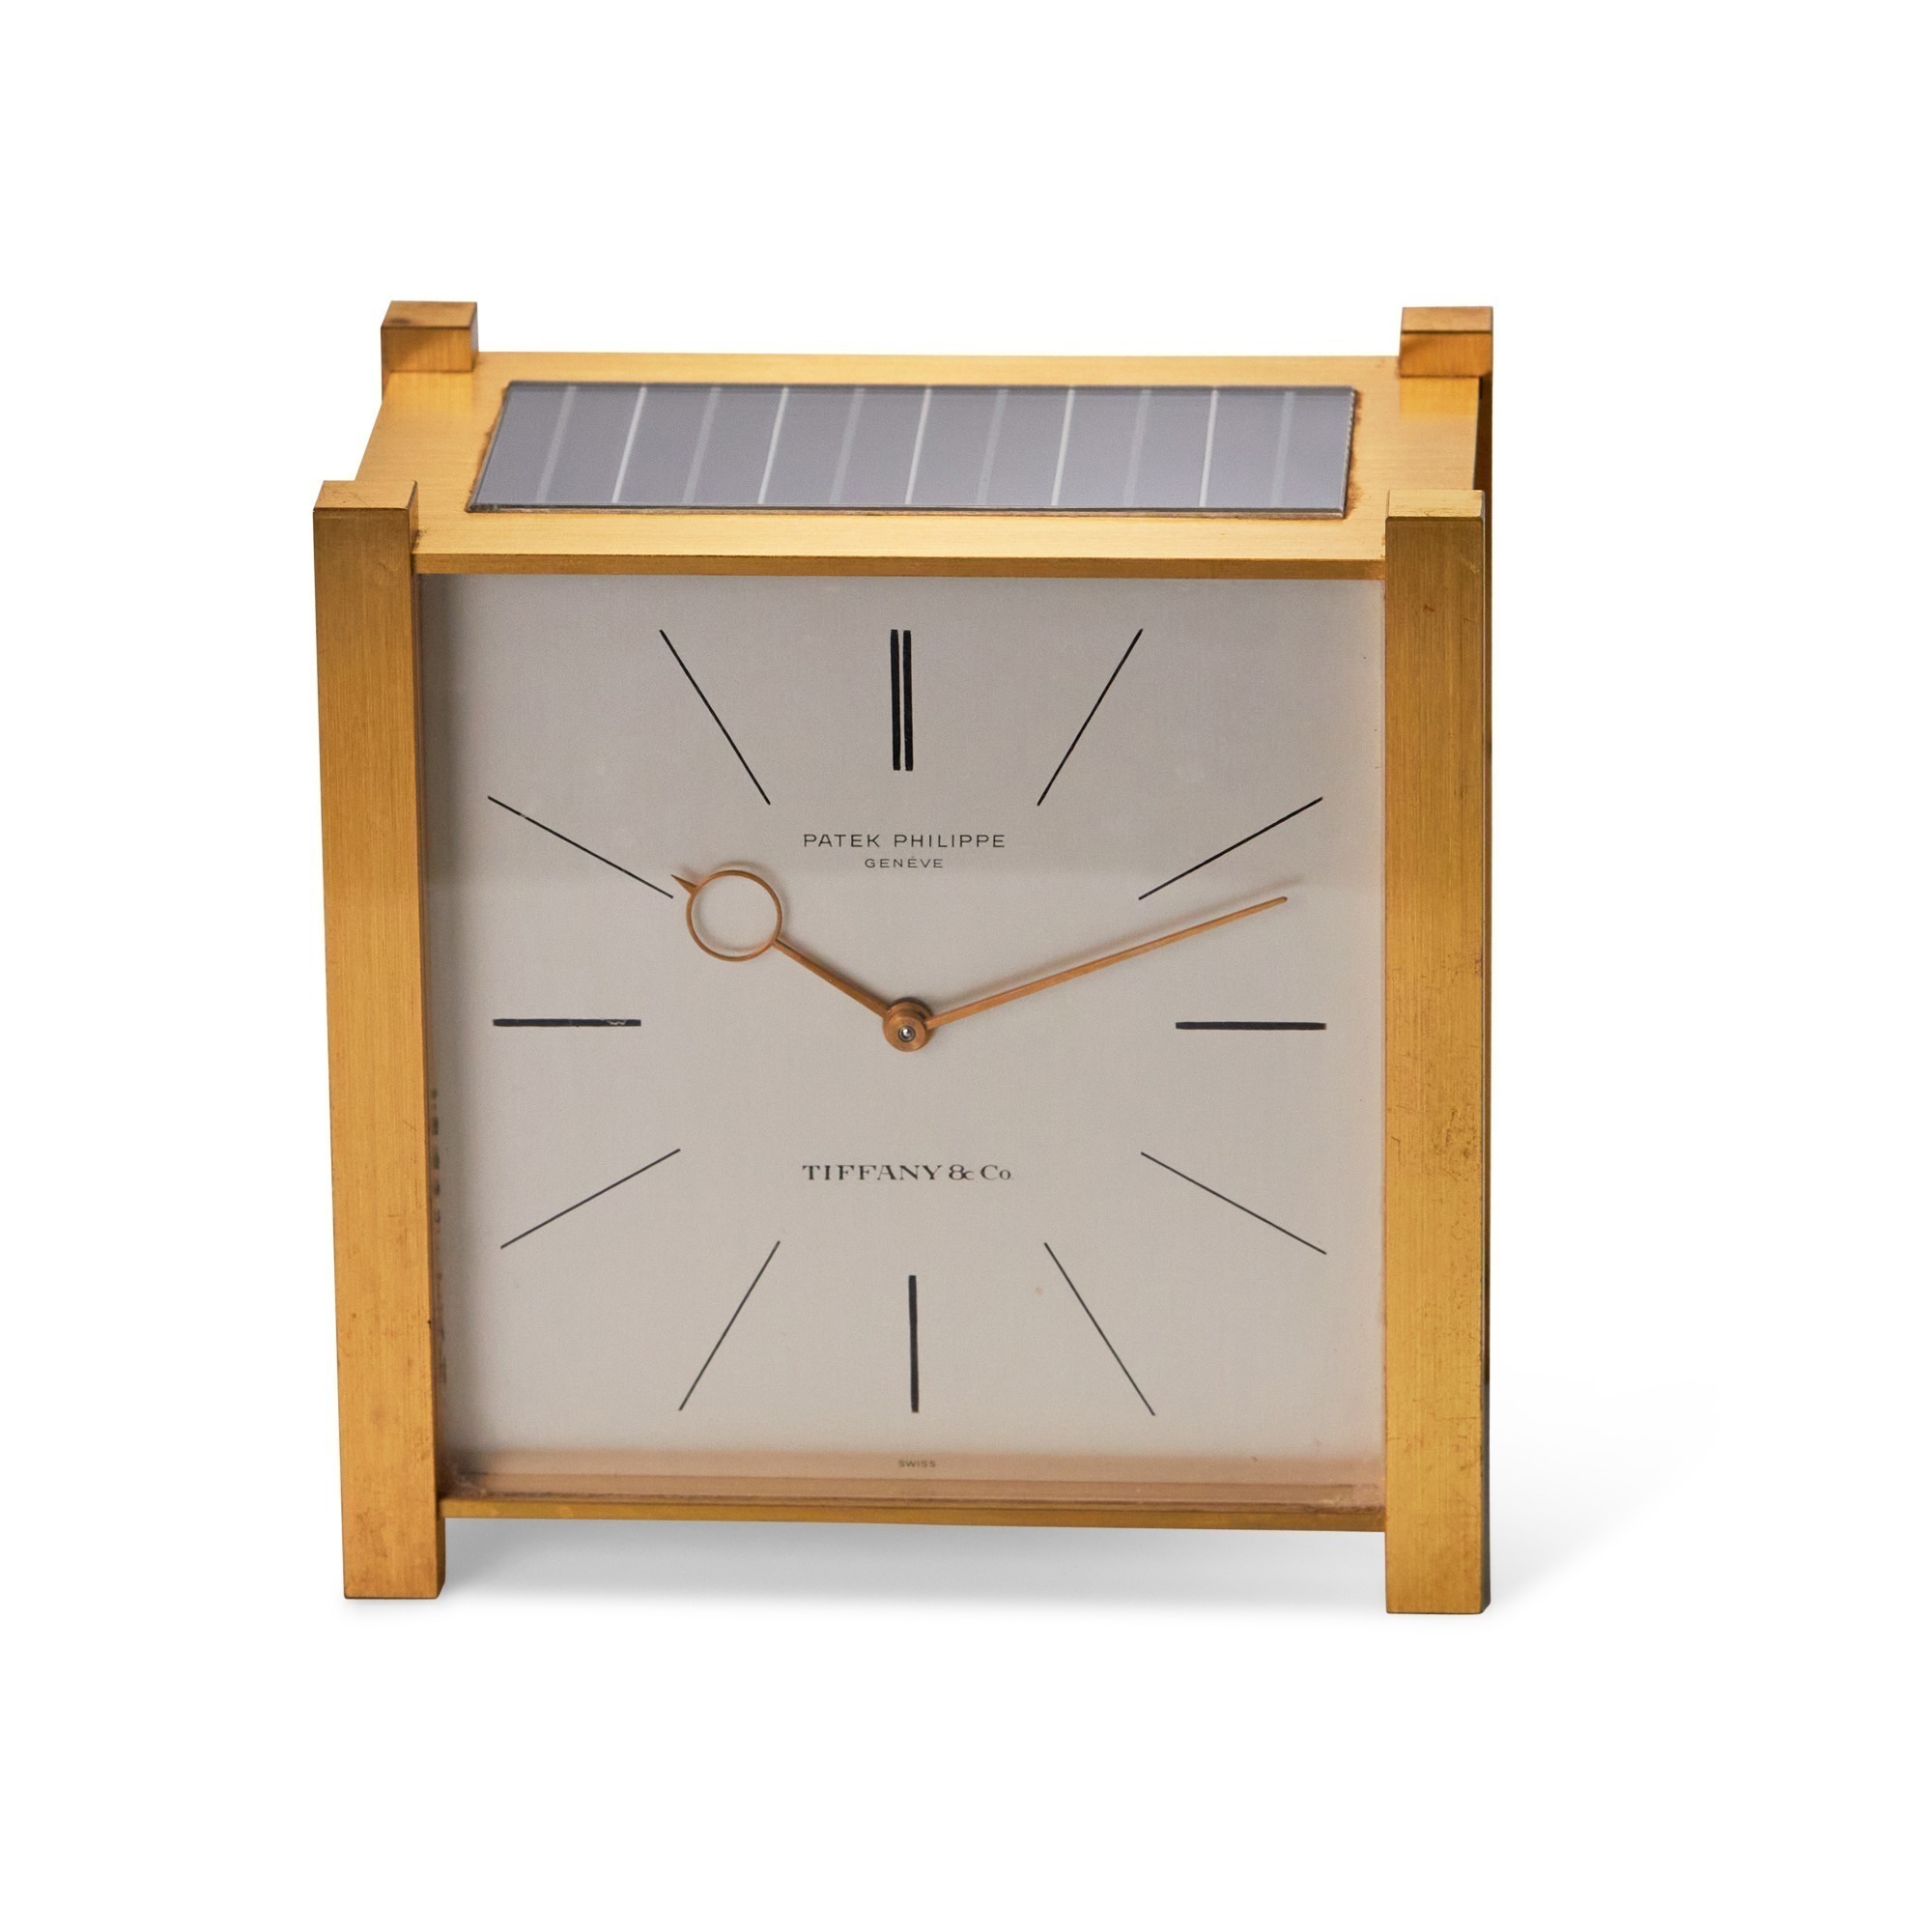 Patek Philippe Solar Desk Clock Retailed by Tiffany & Co., Circa 1968